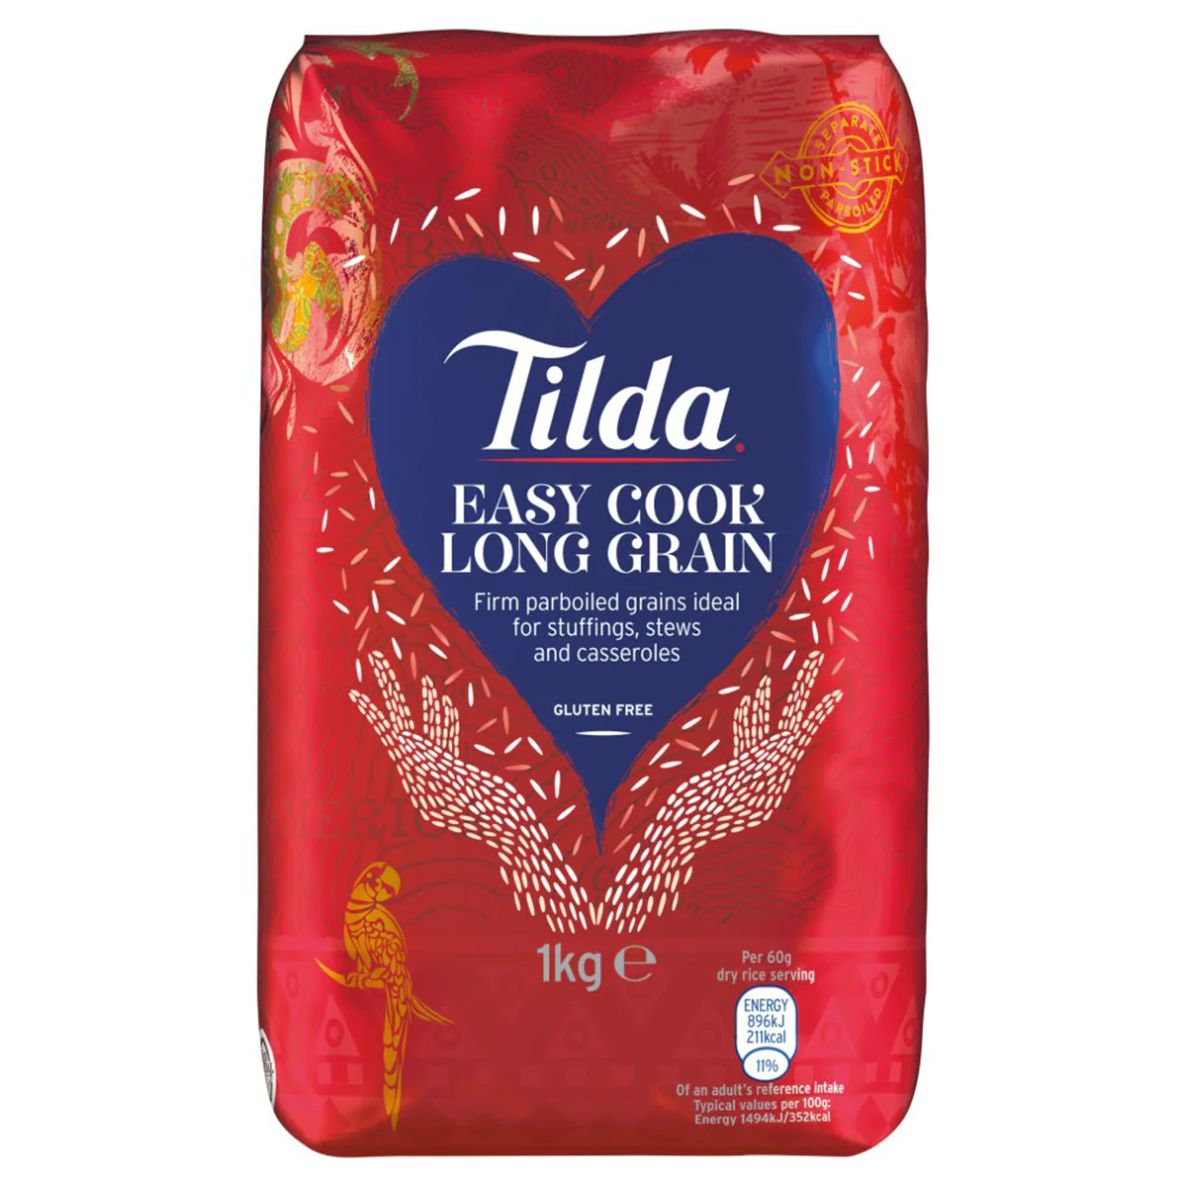 A package of Tilda - Easy Cook Long Grain Rice - 1kg, gluten-free.